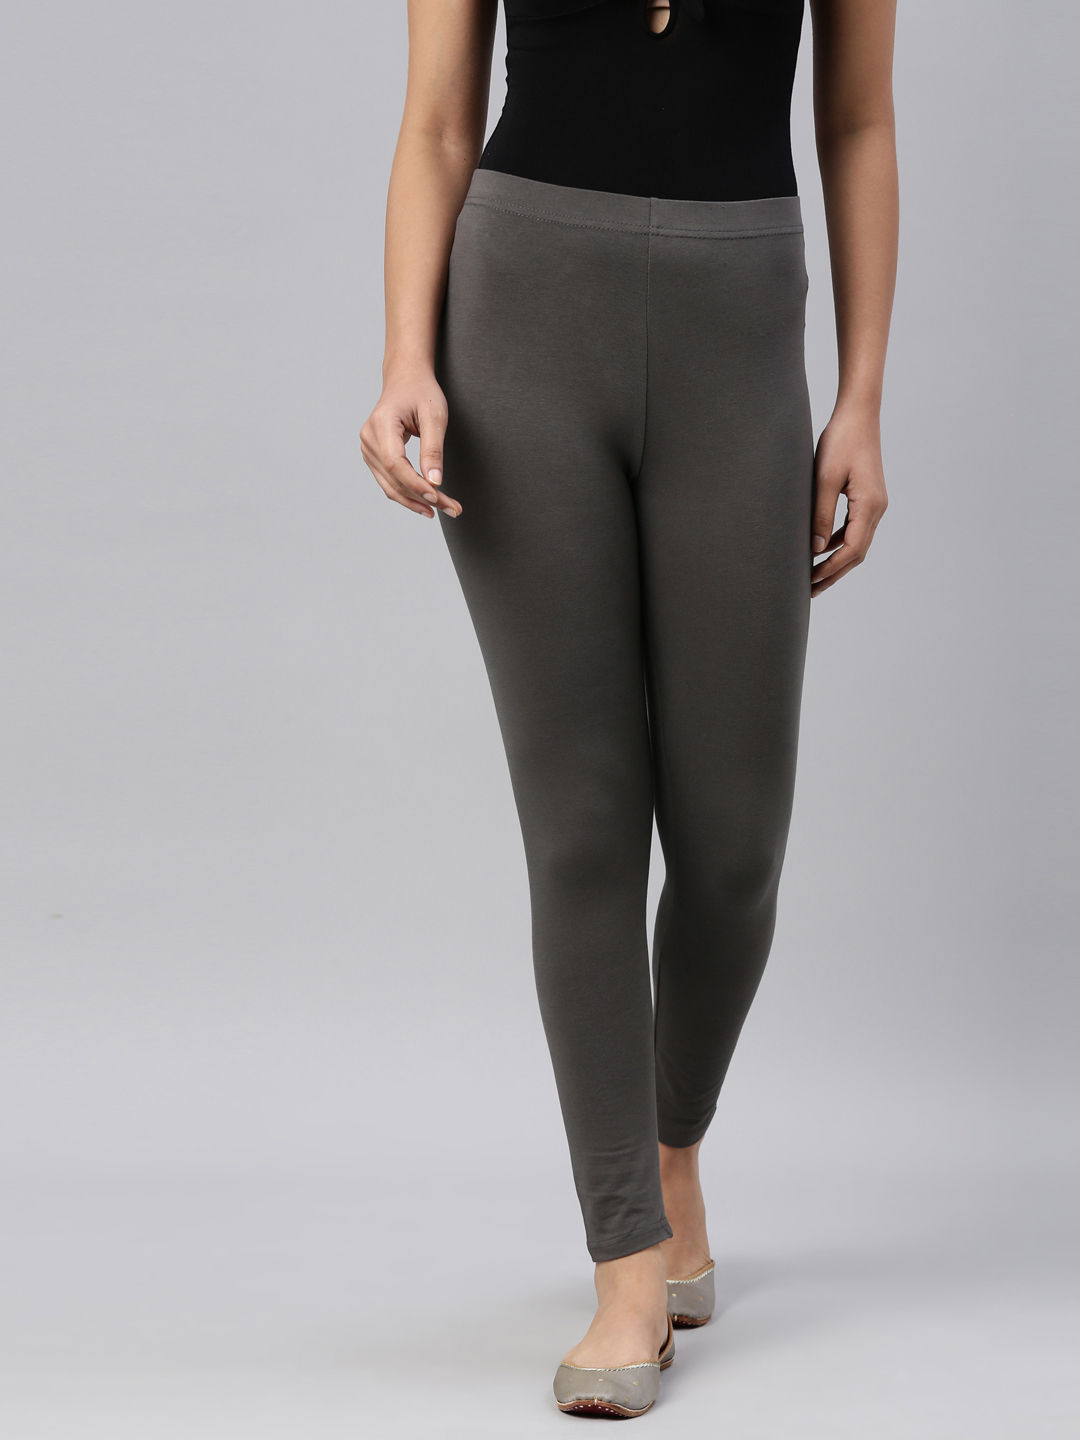 Mid Waist Ladies Dark Grey Cotton Lycra Leggings, Casual Wear, Skin Fit at  Rs 155 in Bengaluru